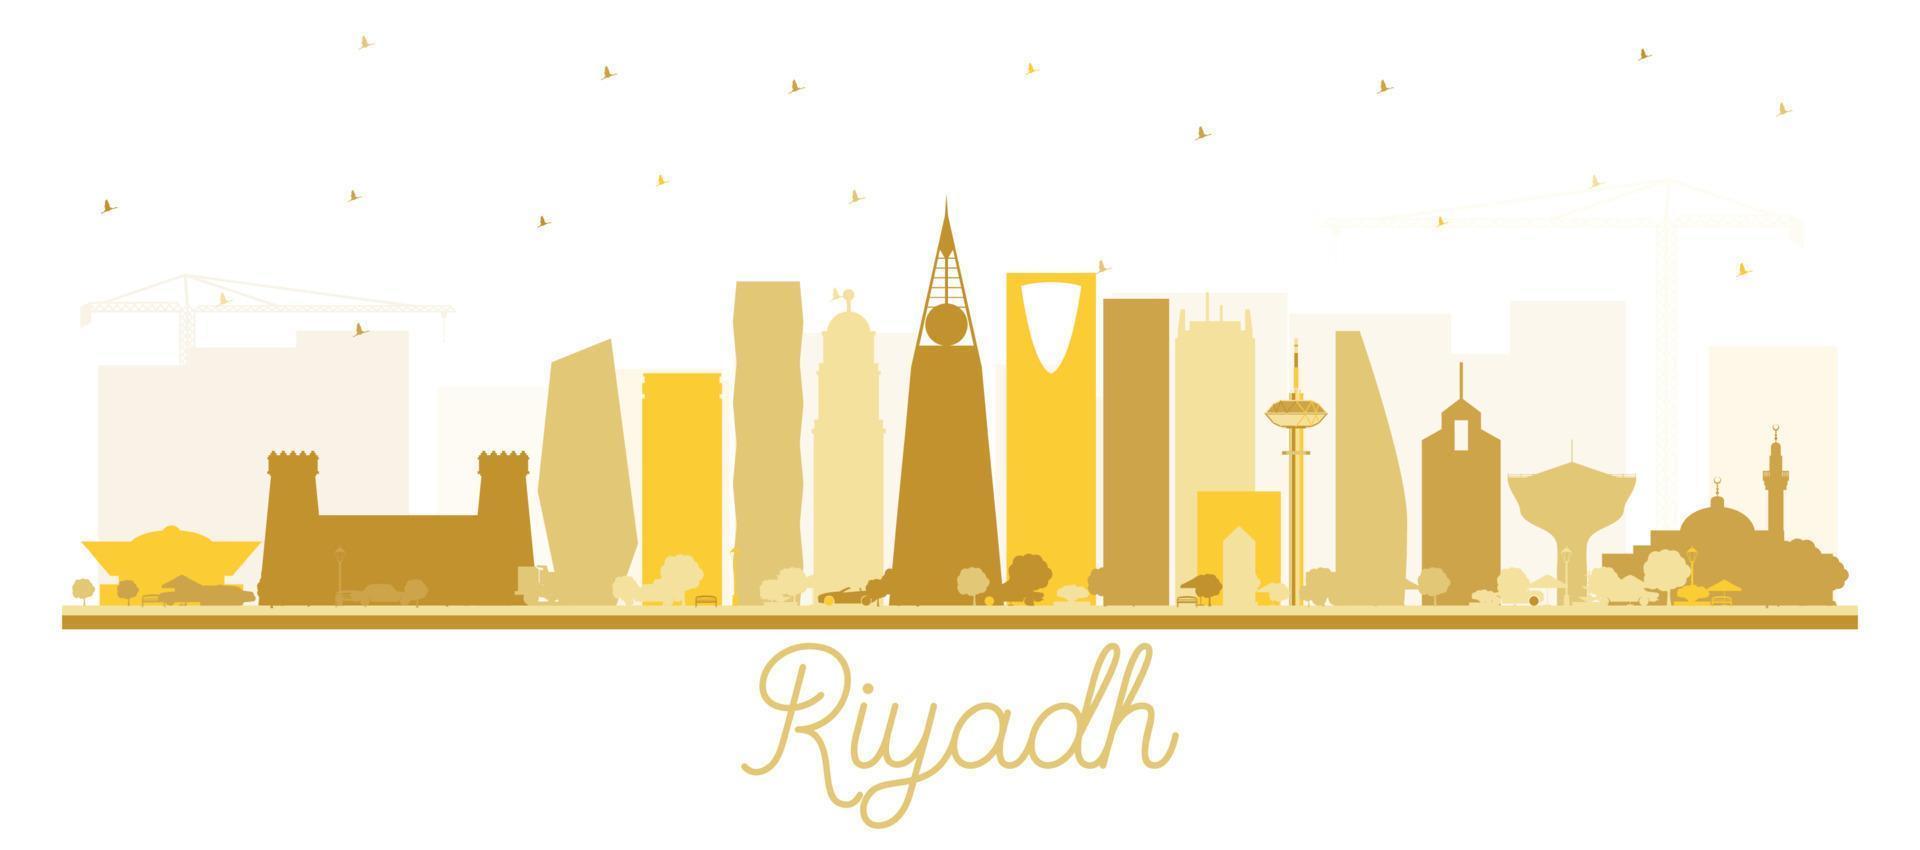 Riyadh Saudi Arabia City Skyline Silhouette with Golden Buildings Isolated on White. vector